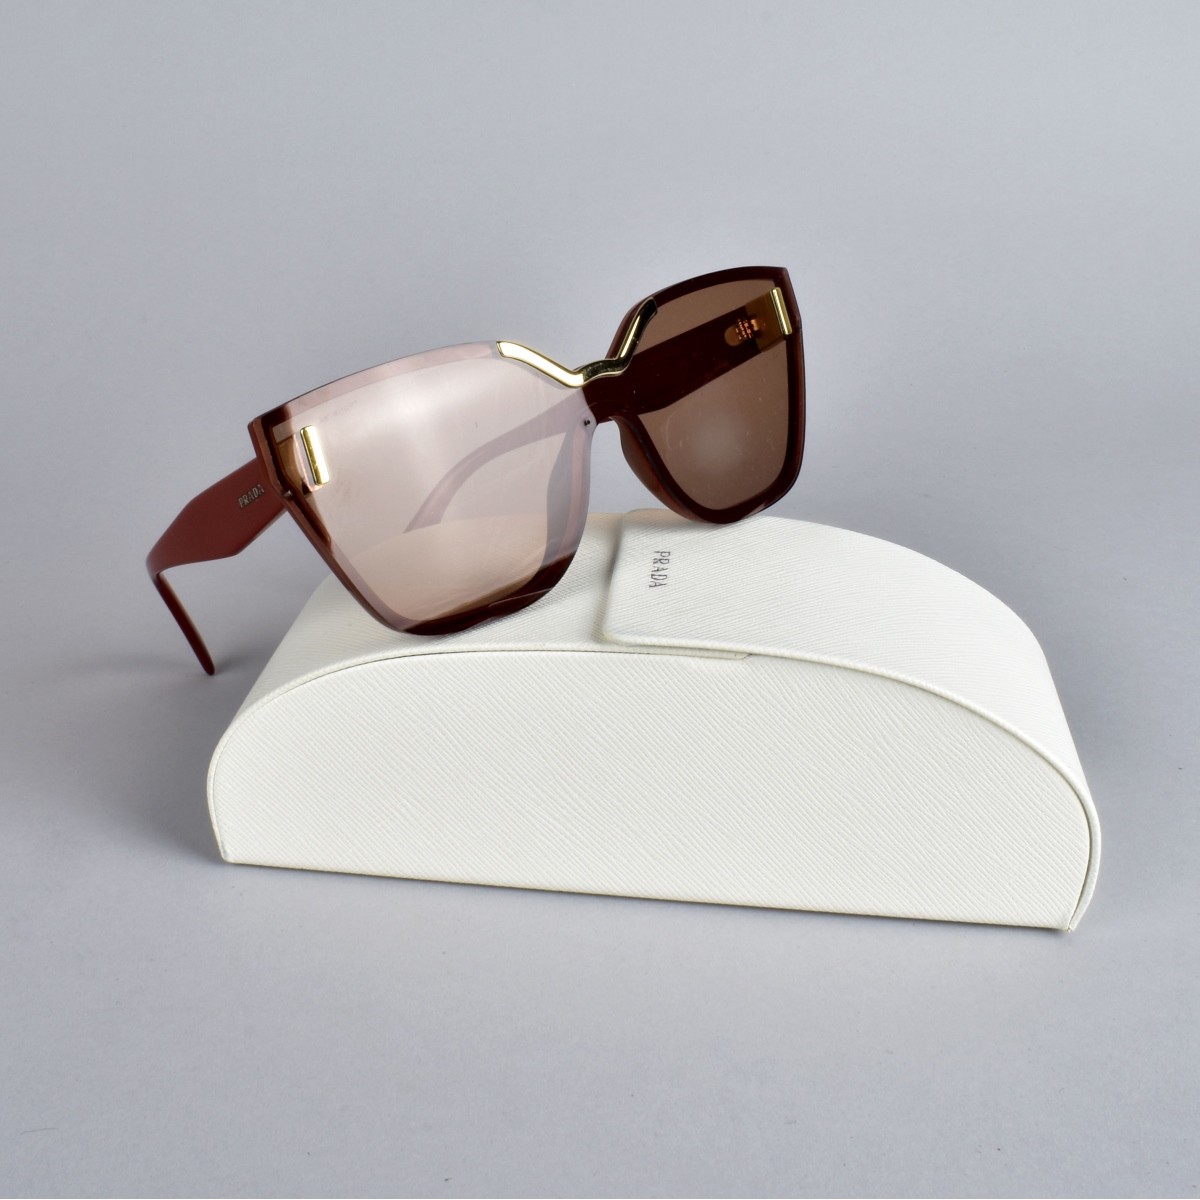 Prada Sunglasses in Original Box